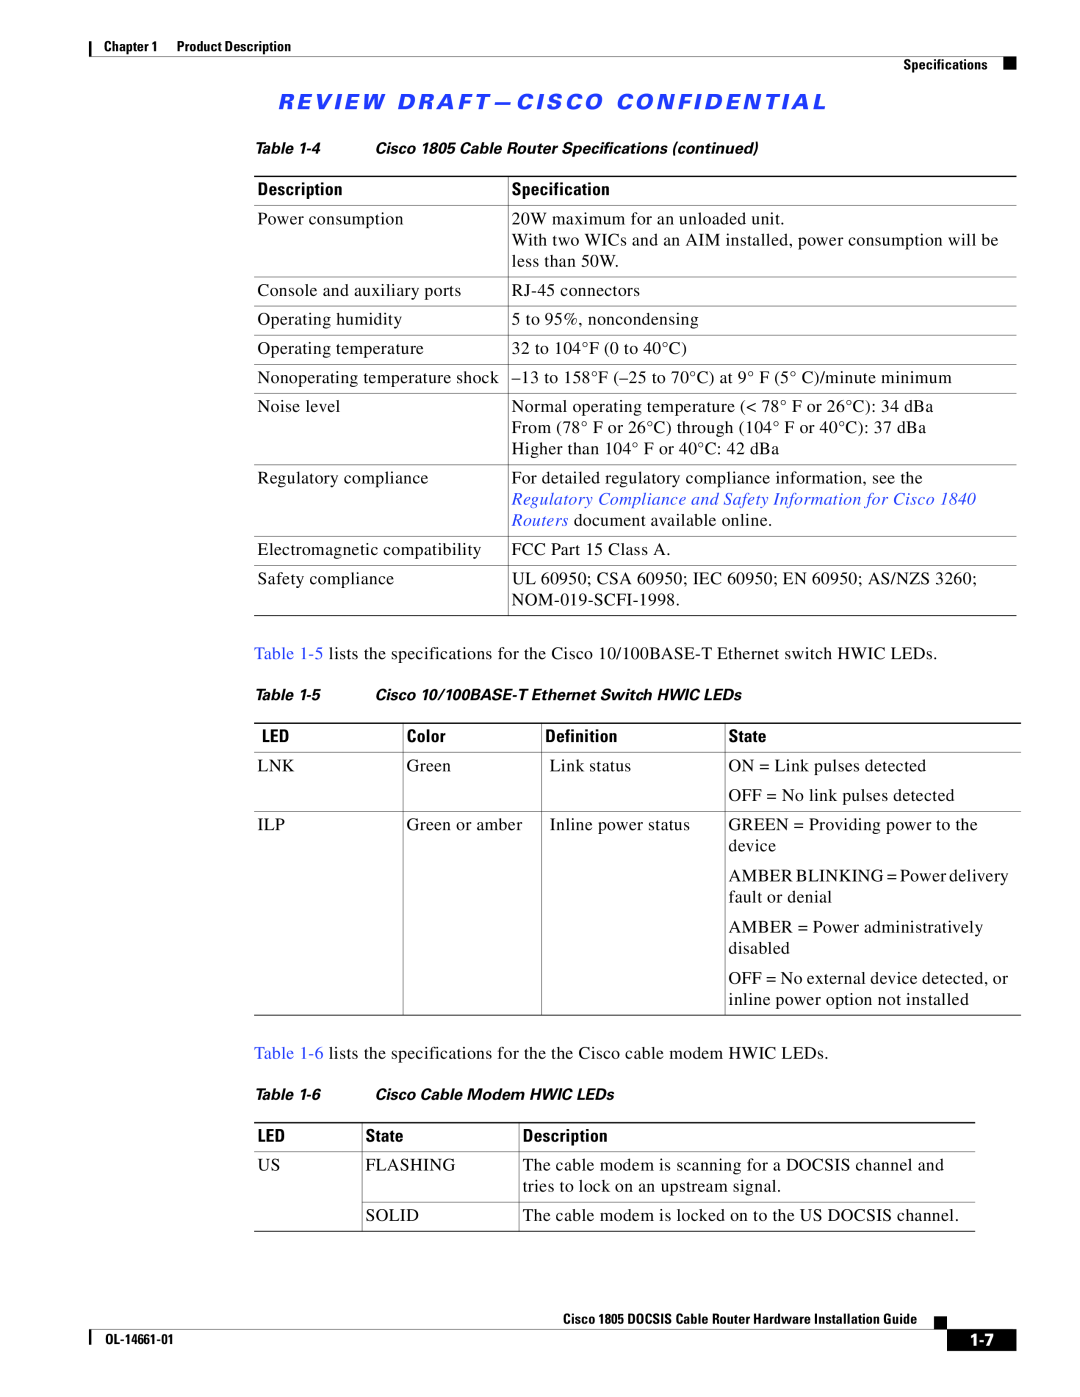 Cisco Systems CISCO1805-D Definition, State, Review Draft - Cisco Confidential, Description, Specification, Color 